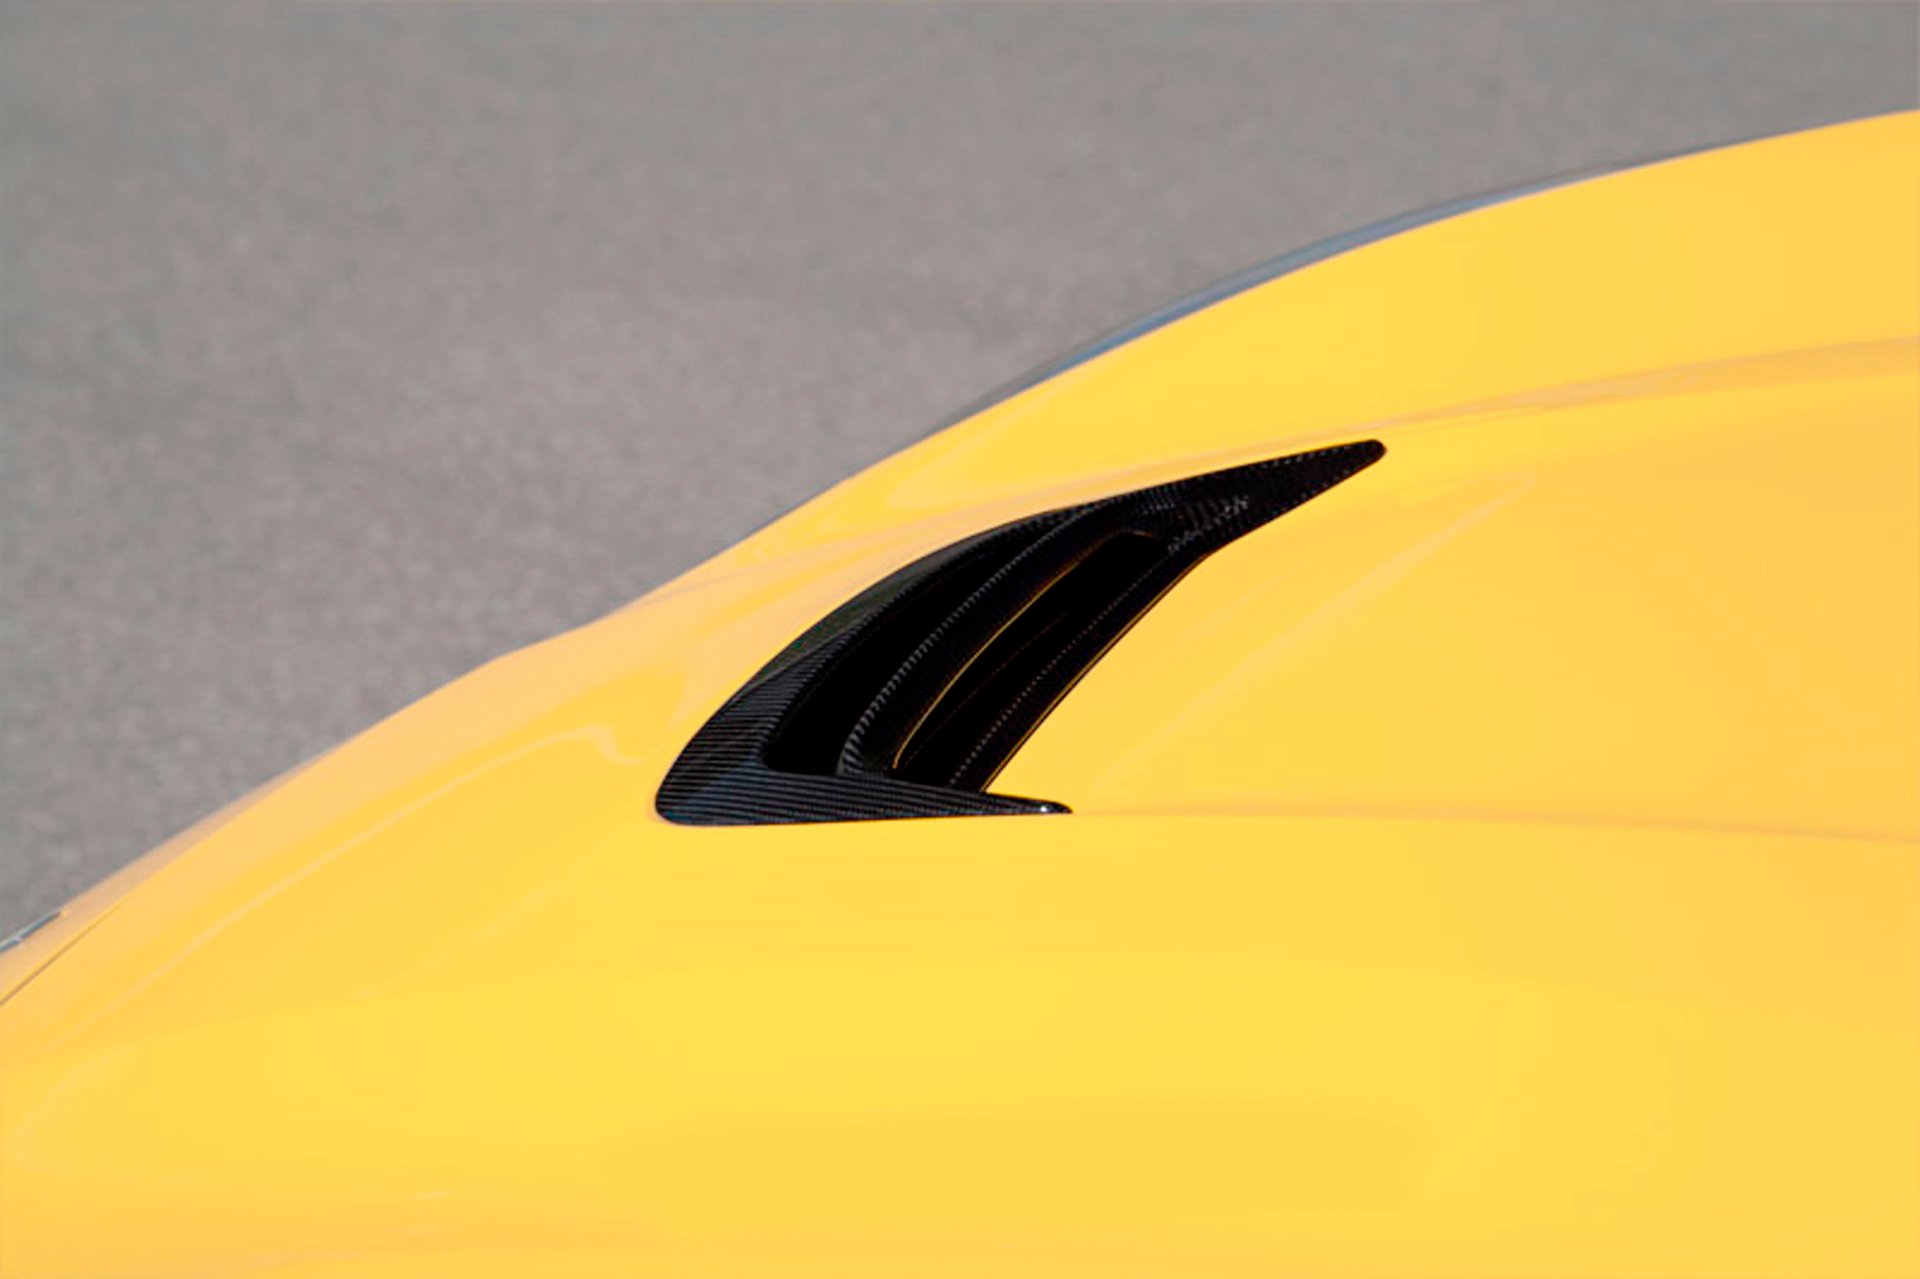 Hodoor Performance Carbon fiber insert in the Central air intake of the hood Novitec Style for Ferrari F12 Berlinetta